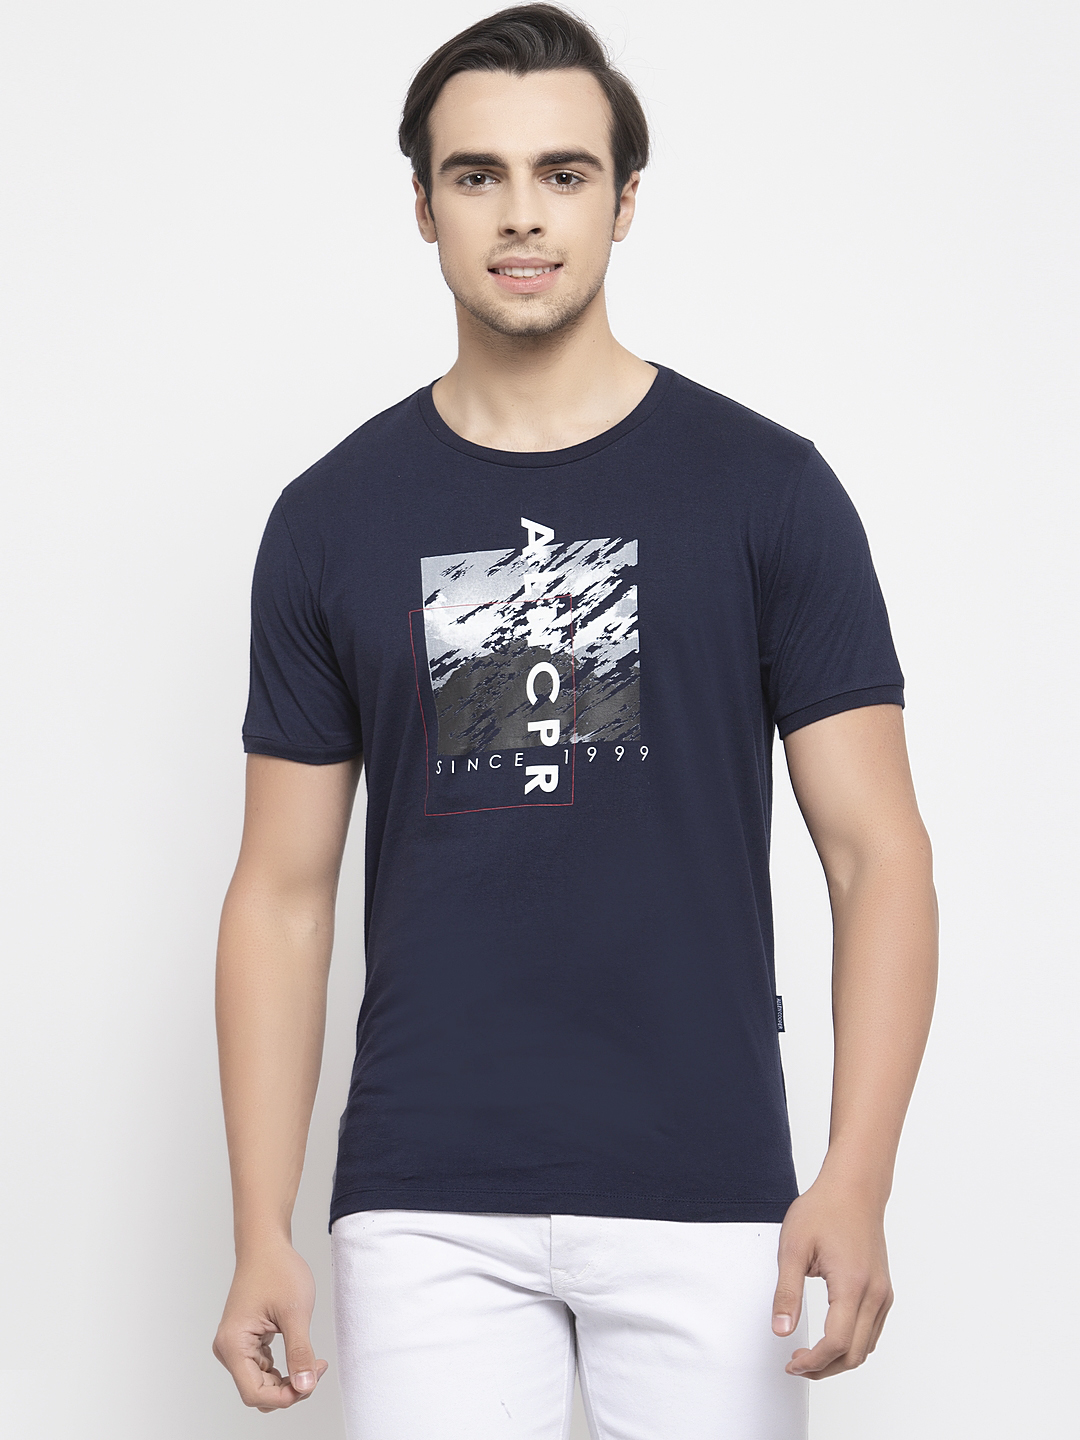 Navy Blue Color Round Neck T-shirt For Mens - Allen Cooper